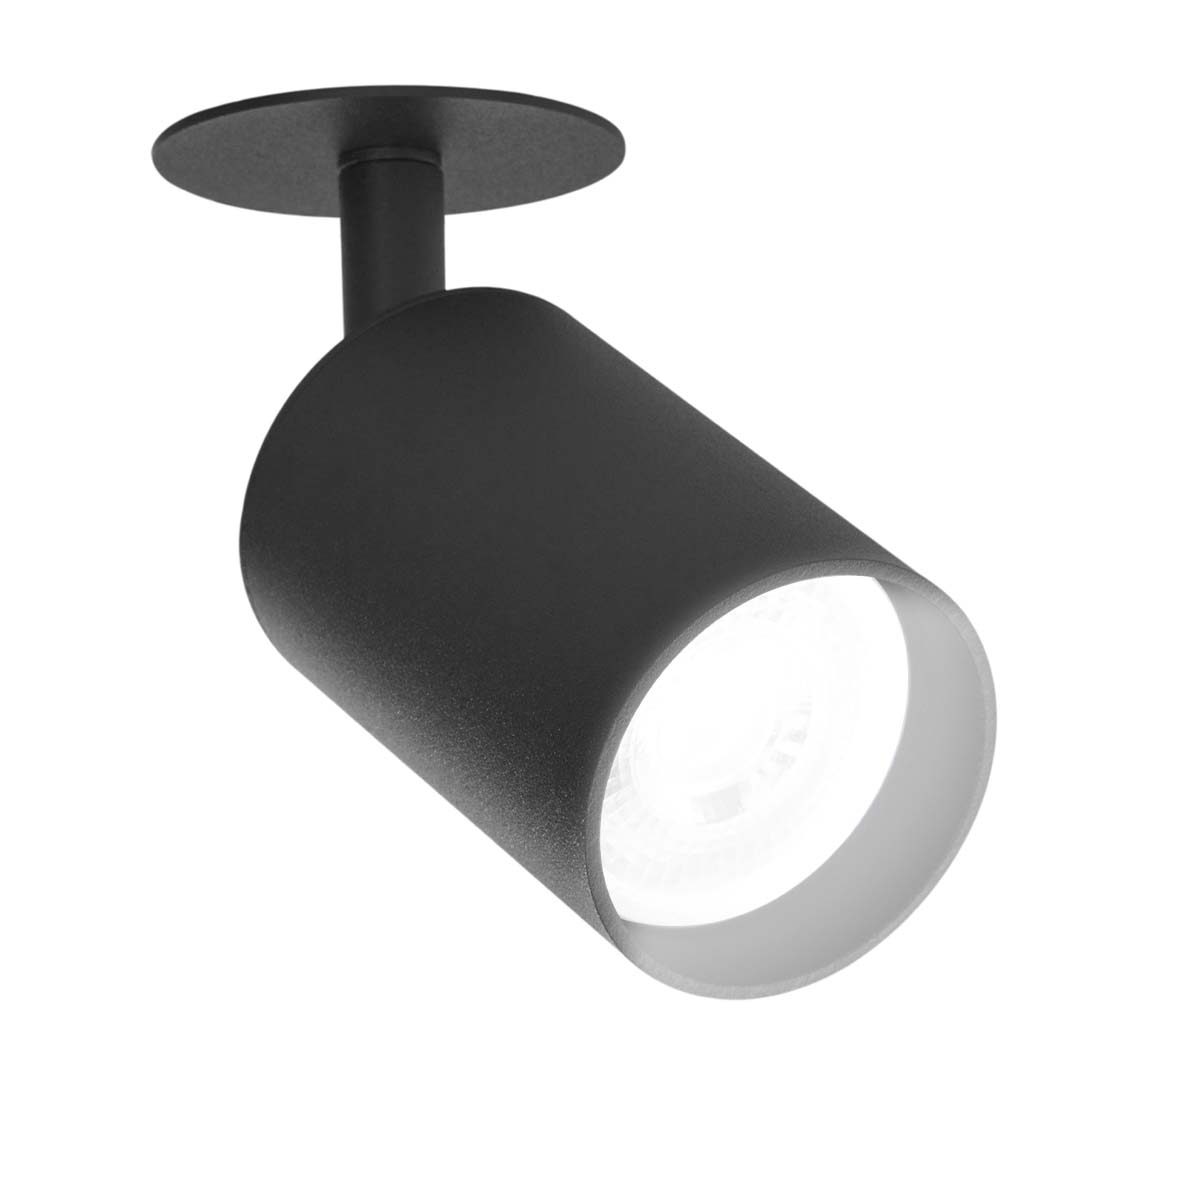 Luminaria LED de empotrar en techo tipo spot GU10 50 W máx. 120 v~ Modelo TL-5150.EM Illux